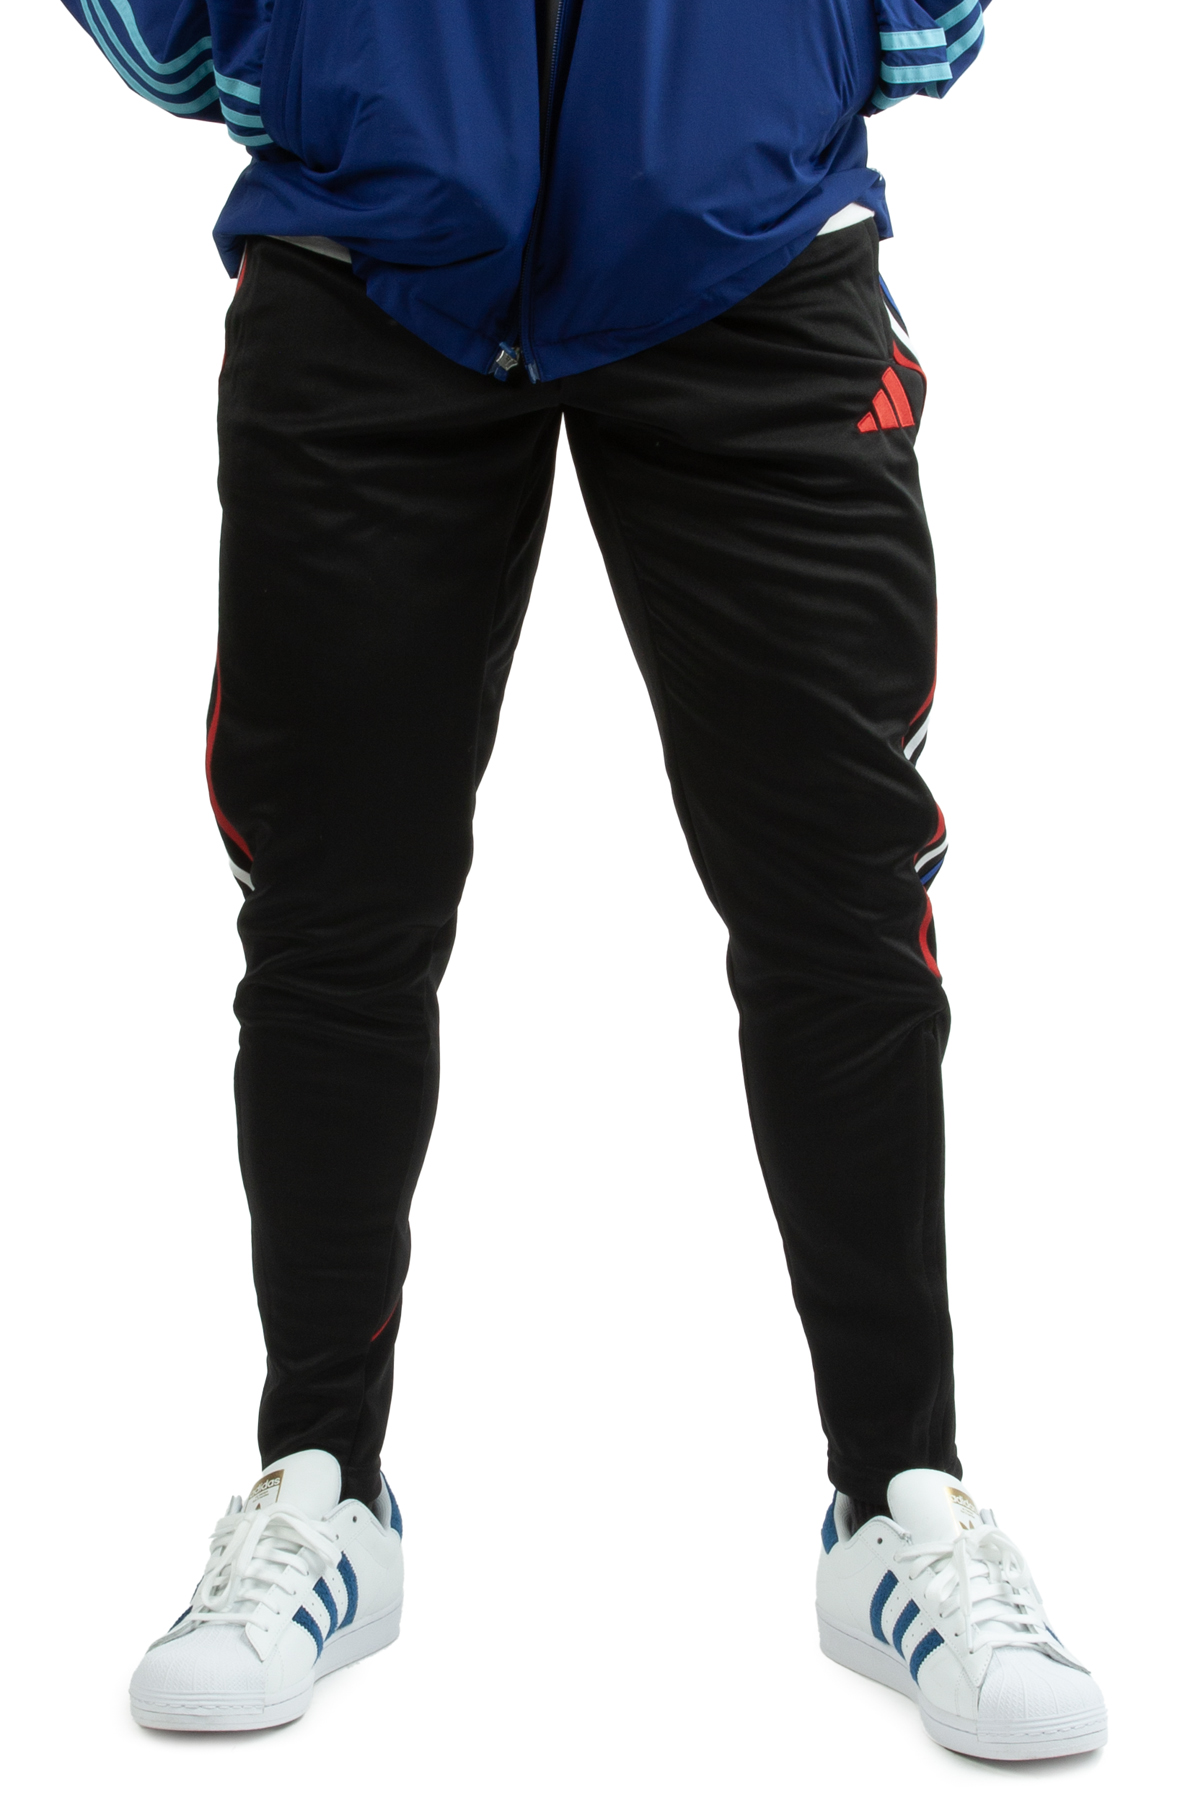 adidas Women's Tiro 21 Track Pants, Black/White/Vivid Red, X-Small